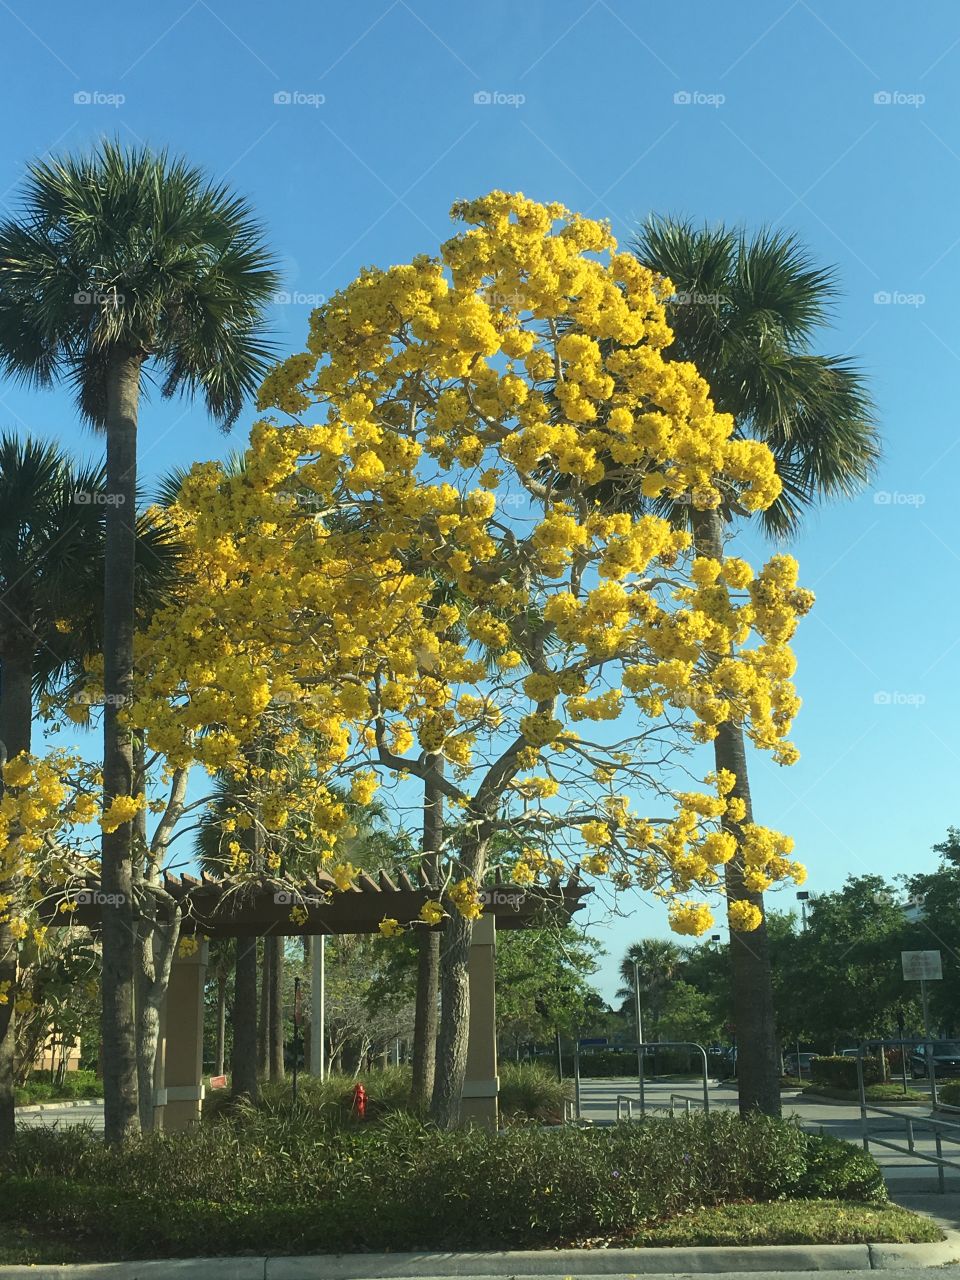 Tree
Yellow 
Outside 